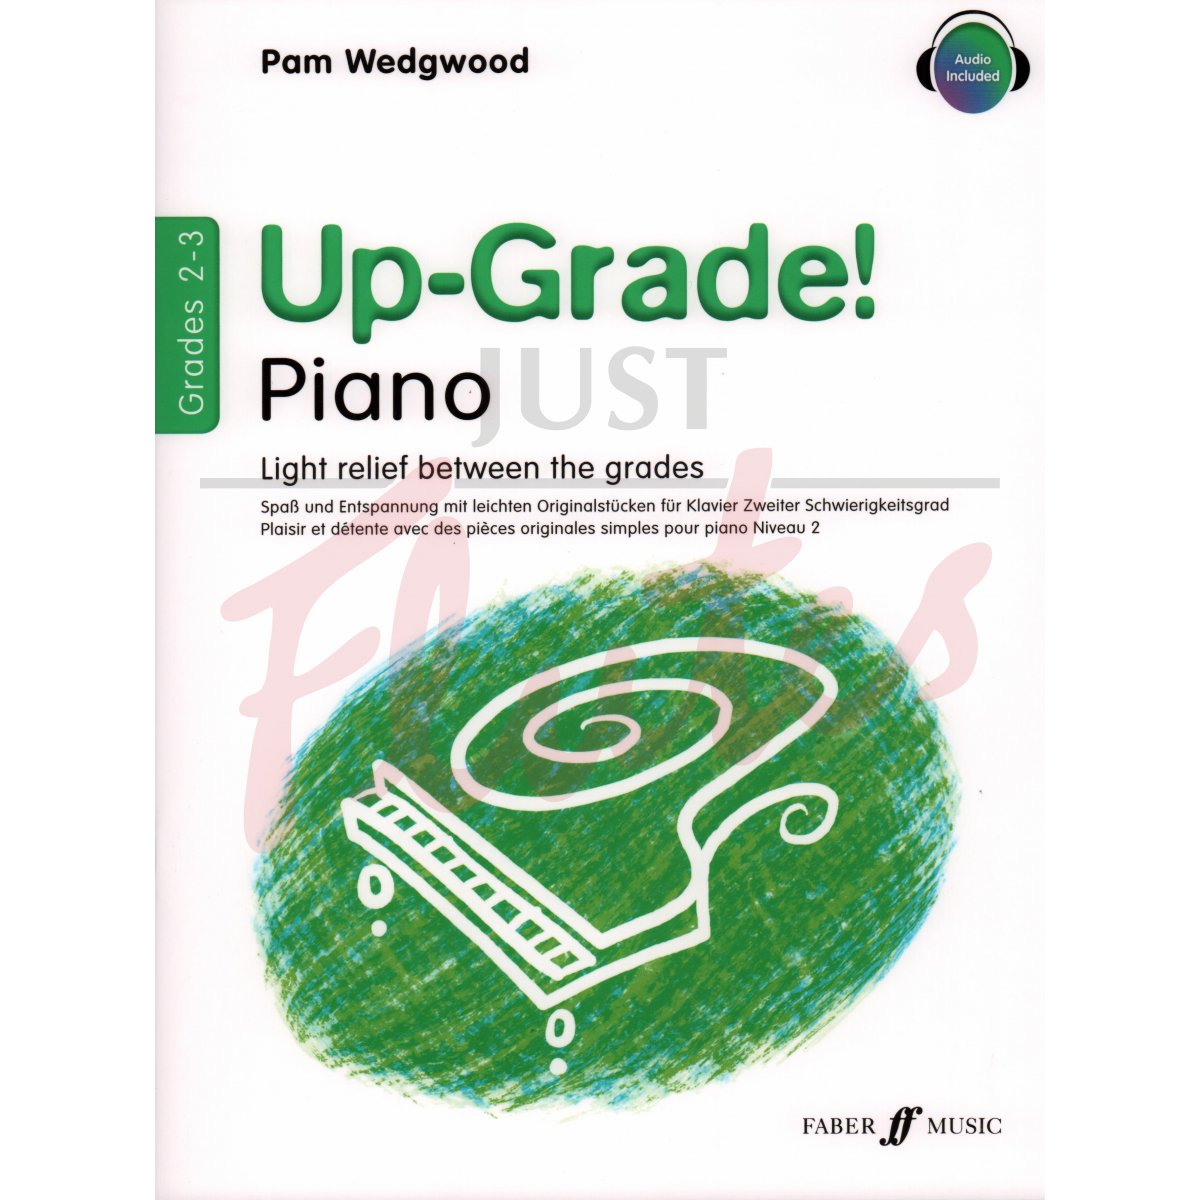 Up-Grade! Piano Grades 2-3